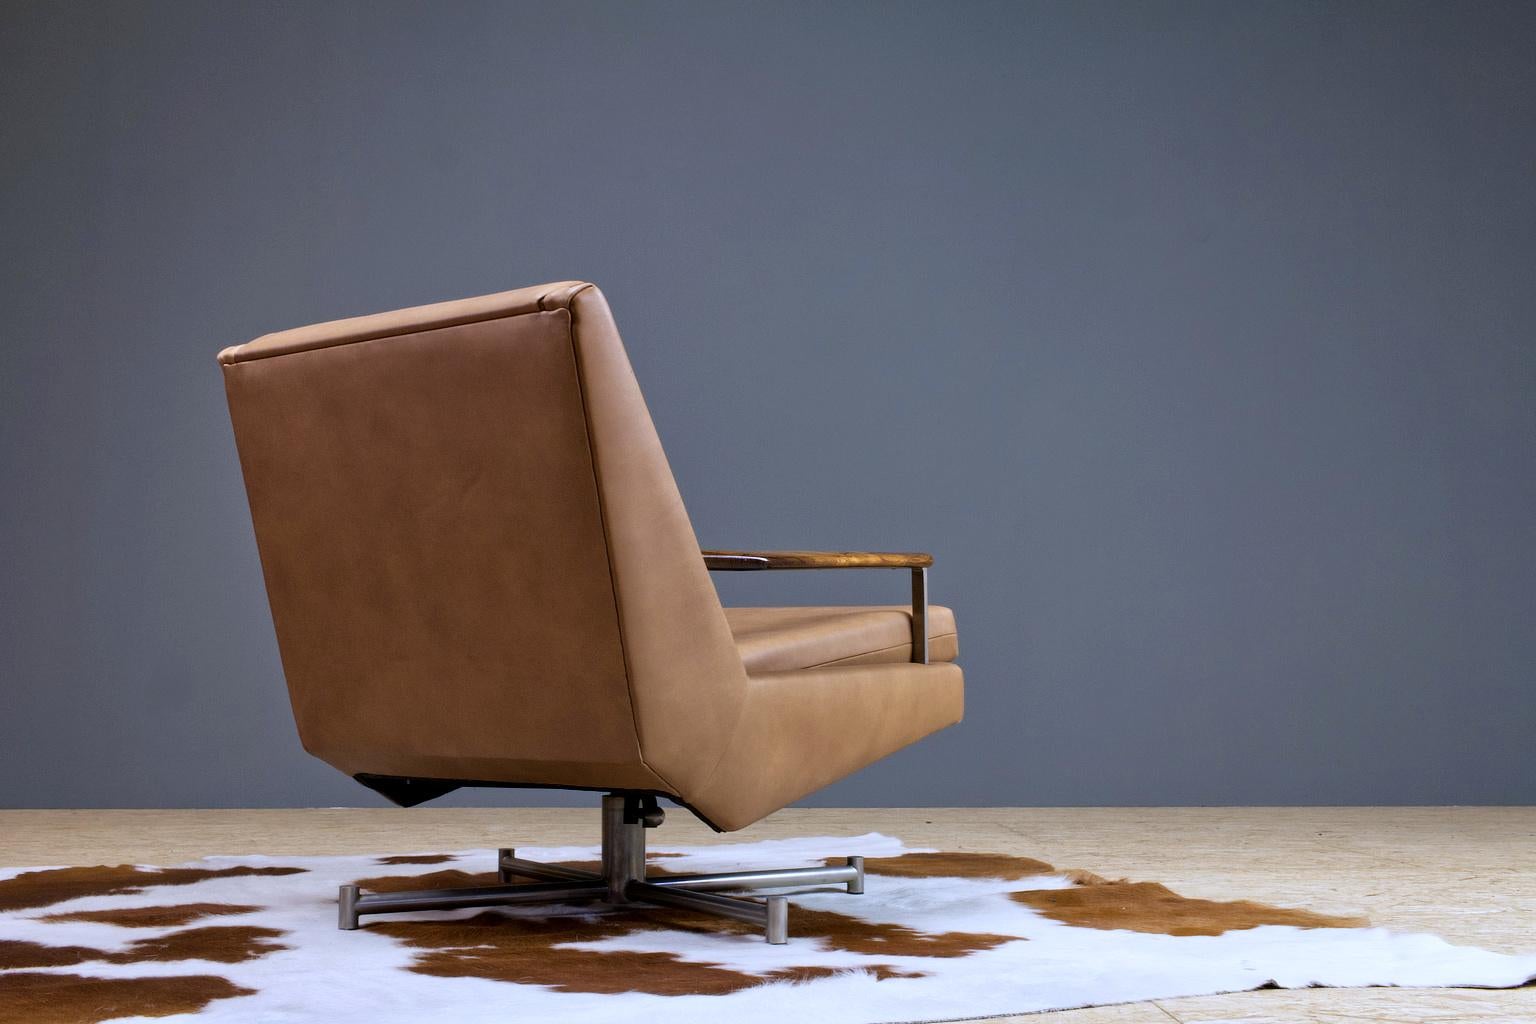 Dutch Mid-Century Modern Lounge Chair by Louis Van Teeffelen in Brown Leather, 1960s For Sale